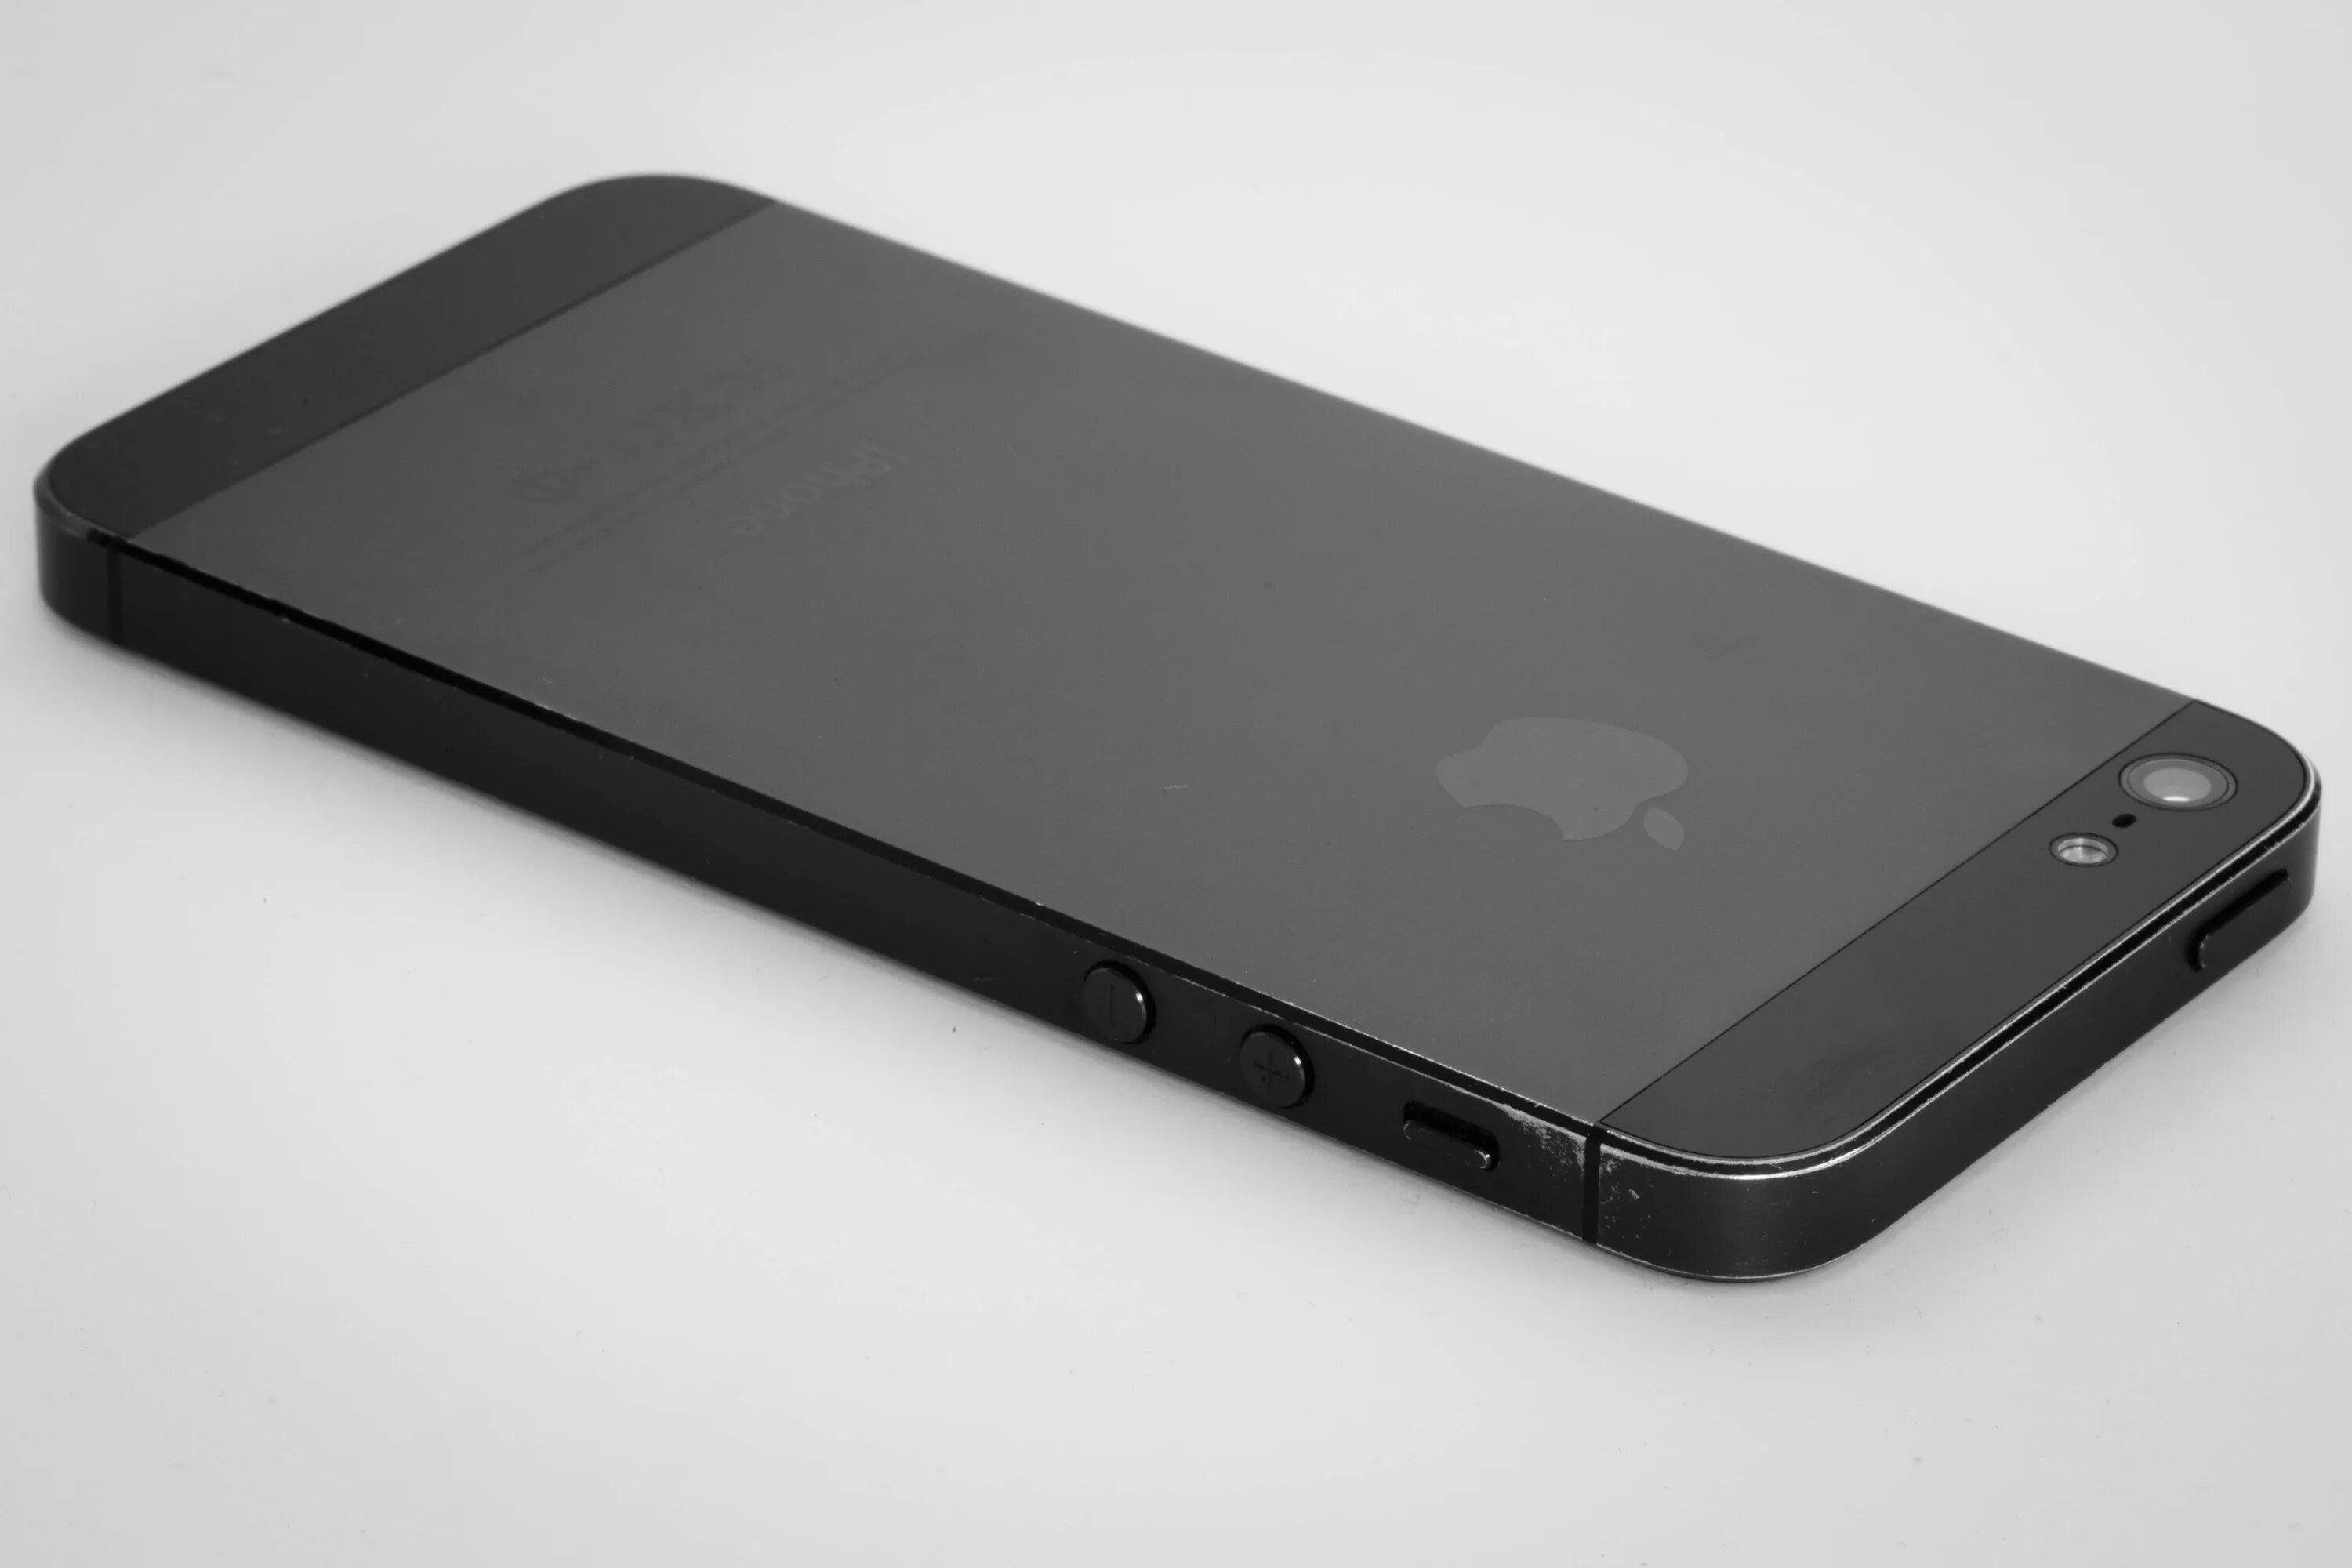 Iphone 5 1. Iphone 5. Iphone 5 16gb Black. Айфон 5 черный. Apple 5.